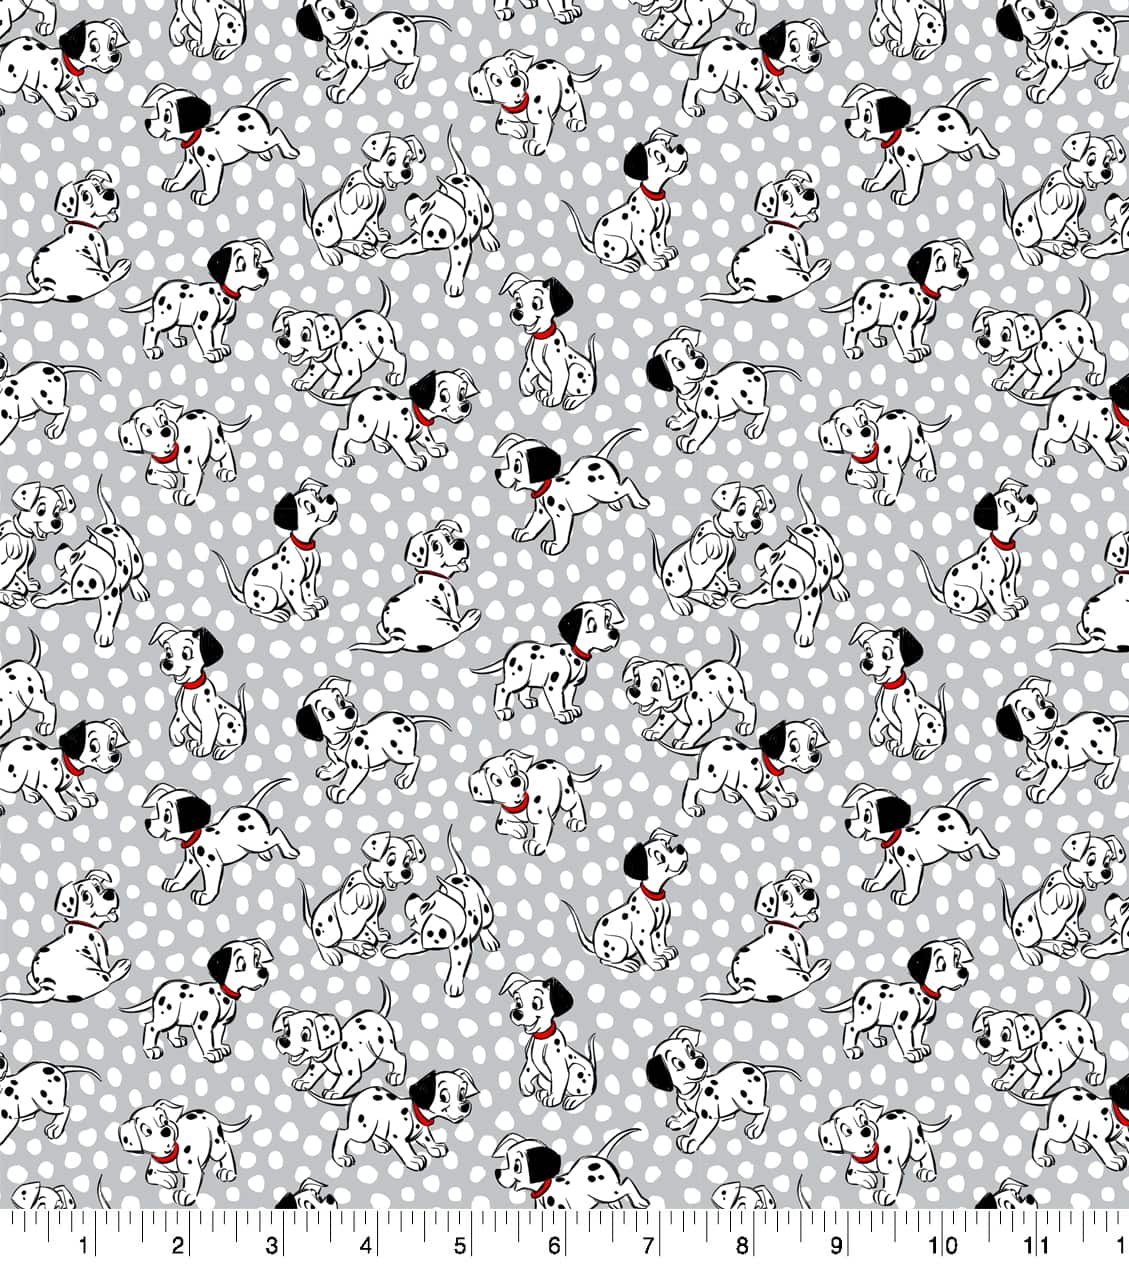 Disney Fabric 101 Dalmatians Fabric